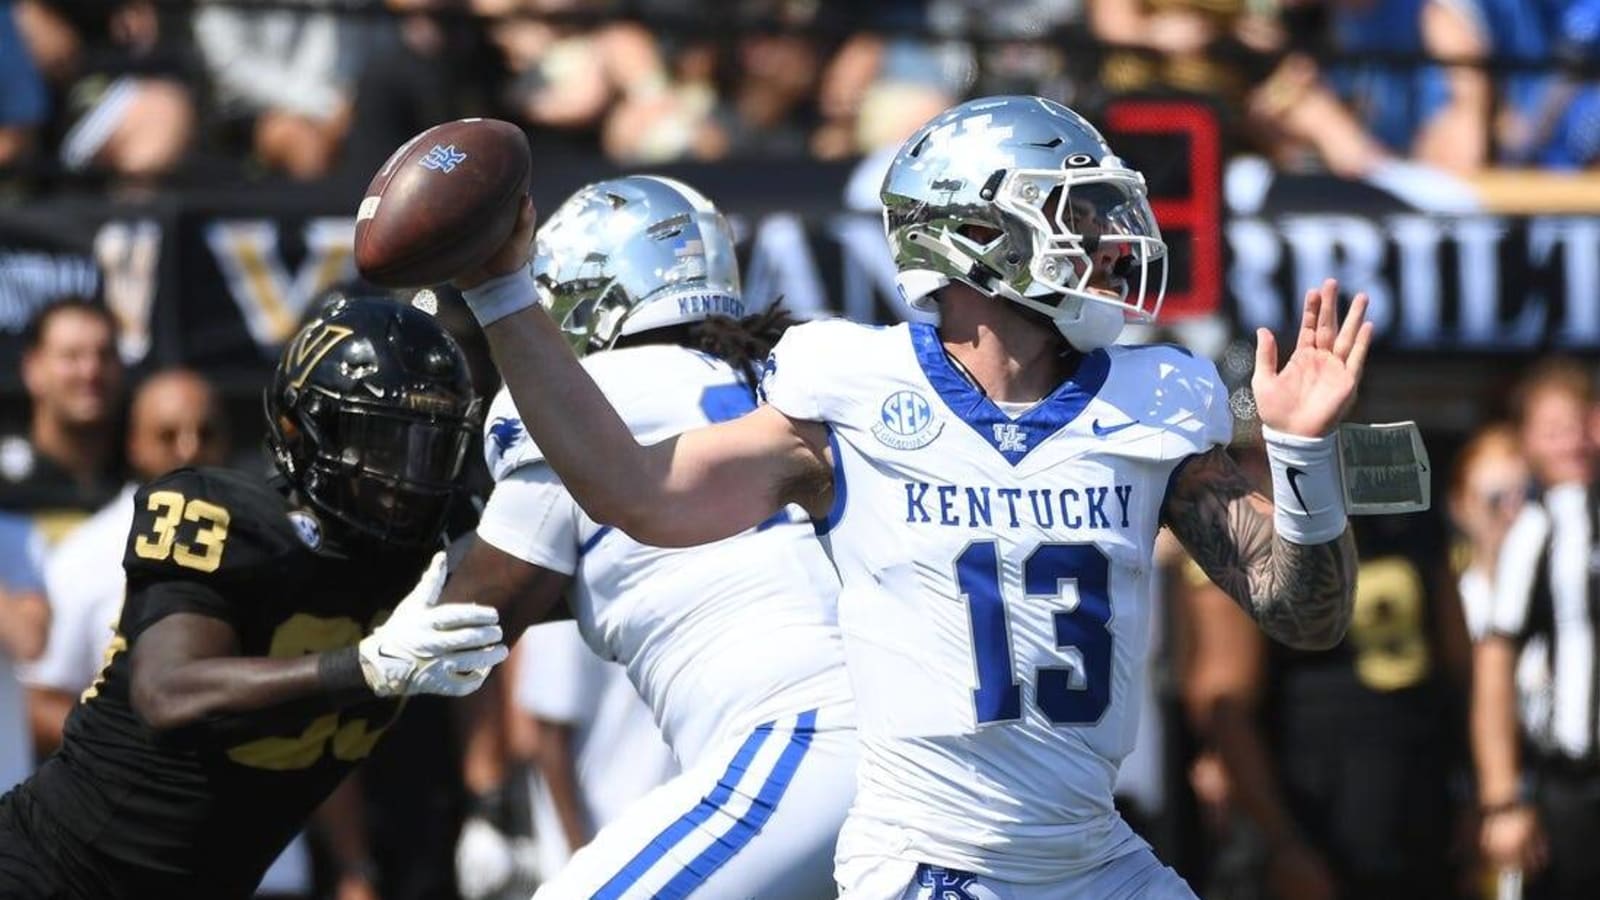 Kentucky starts fast, tops Vanderbilt to remain undefeated